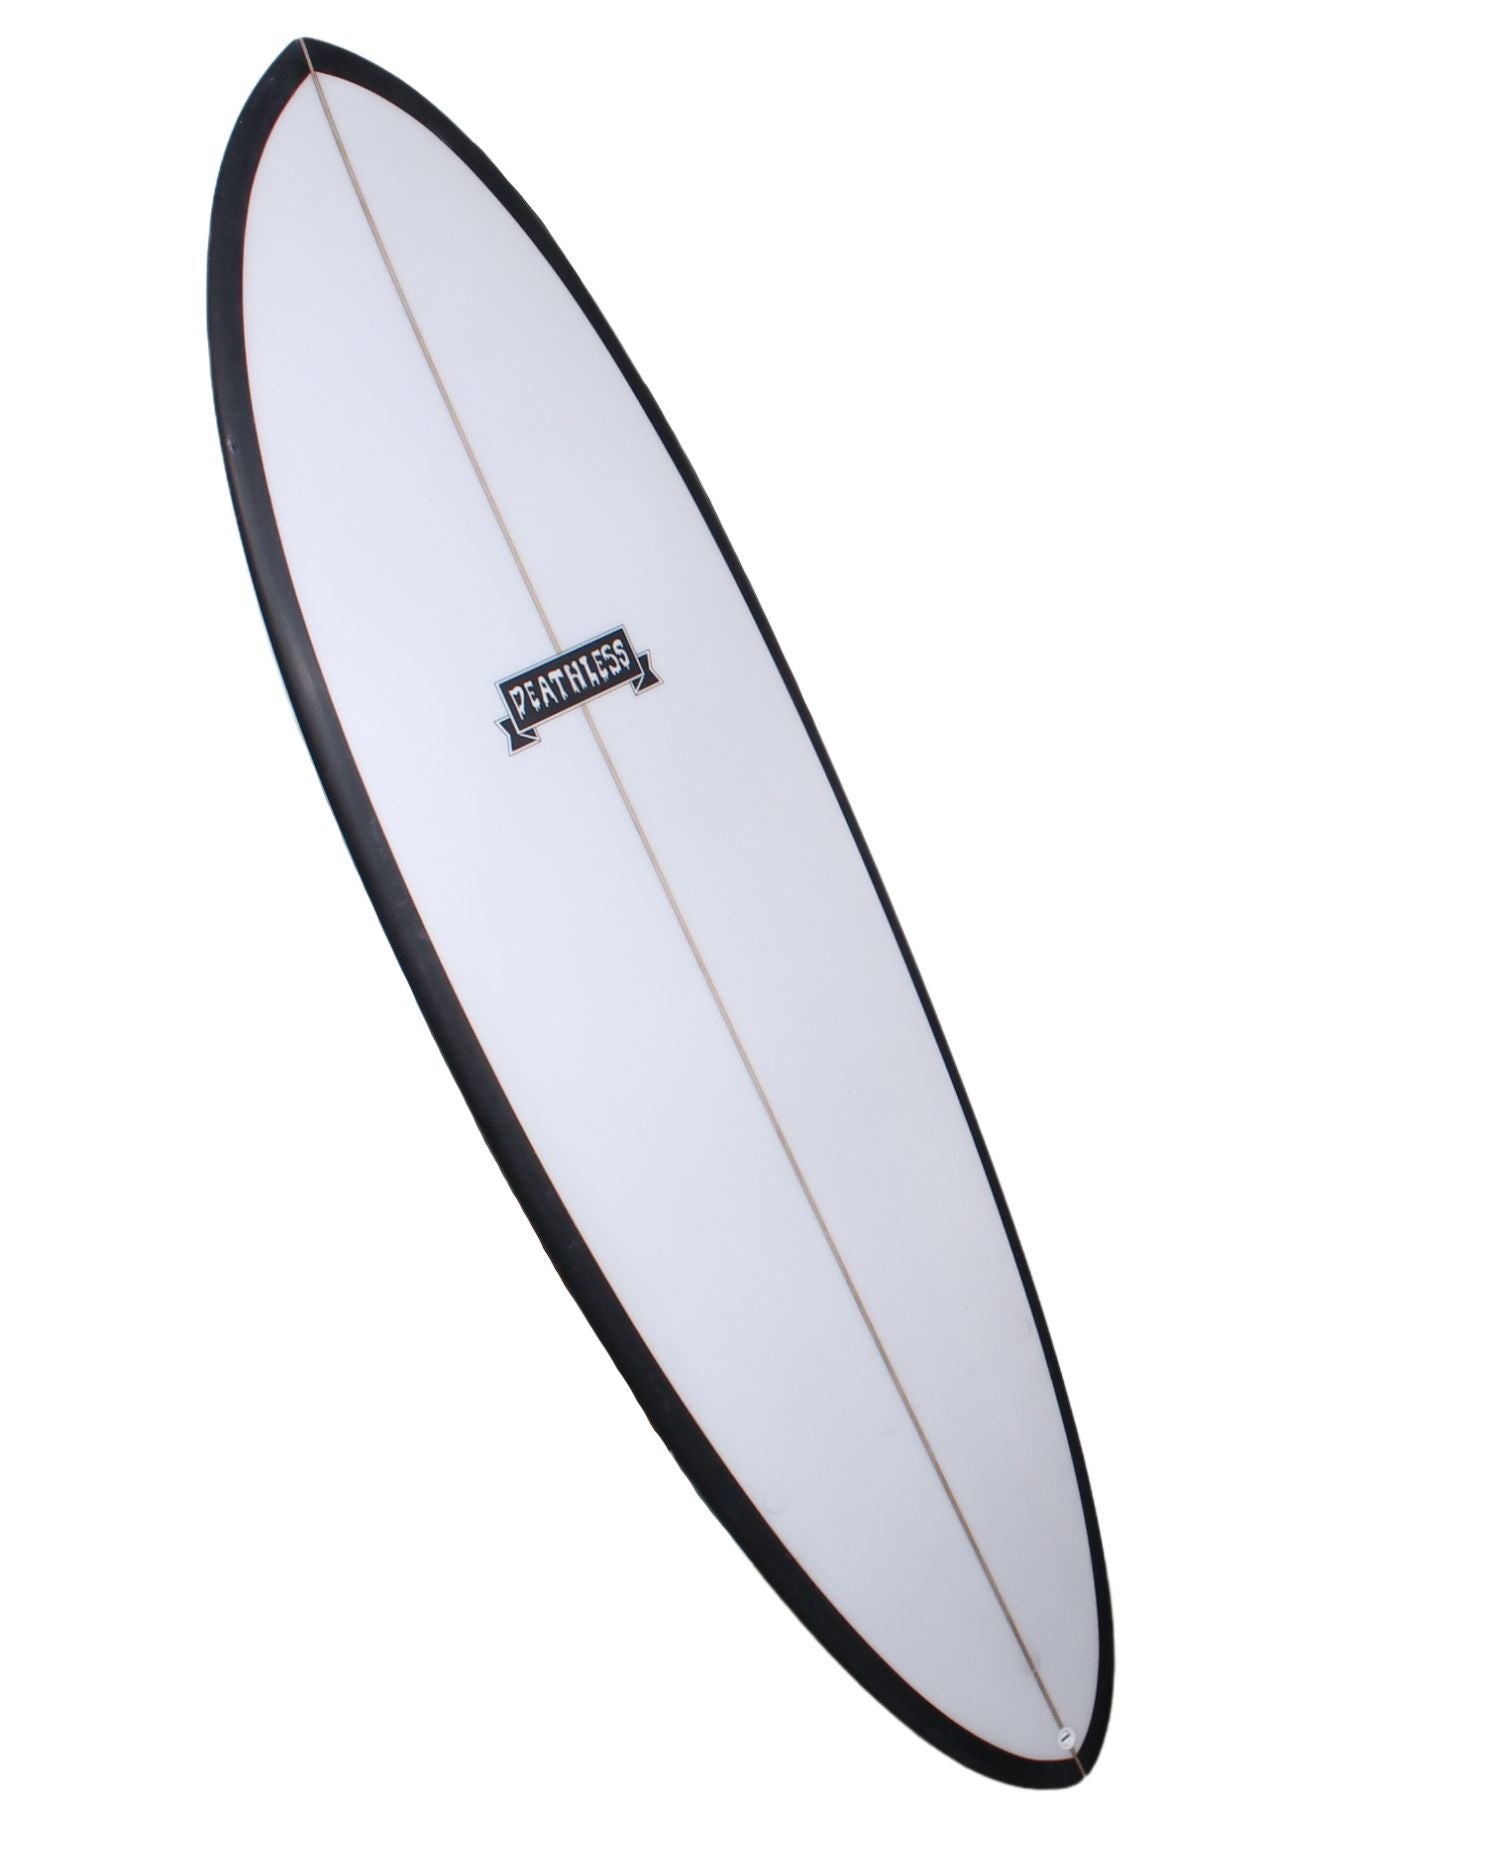 DEATHLESS 'WITCH CRAFT' SURFBOARD